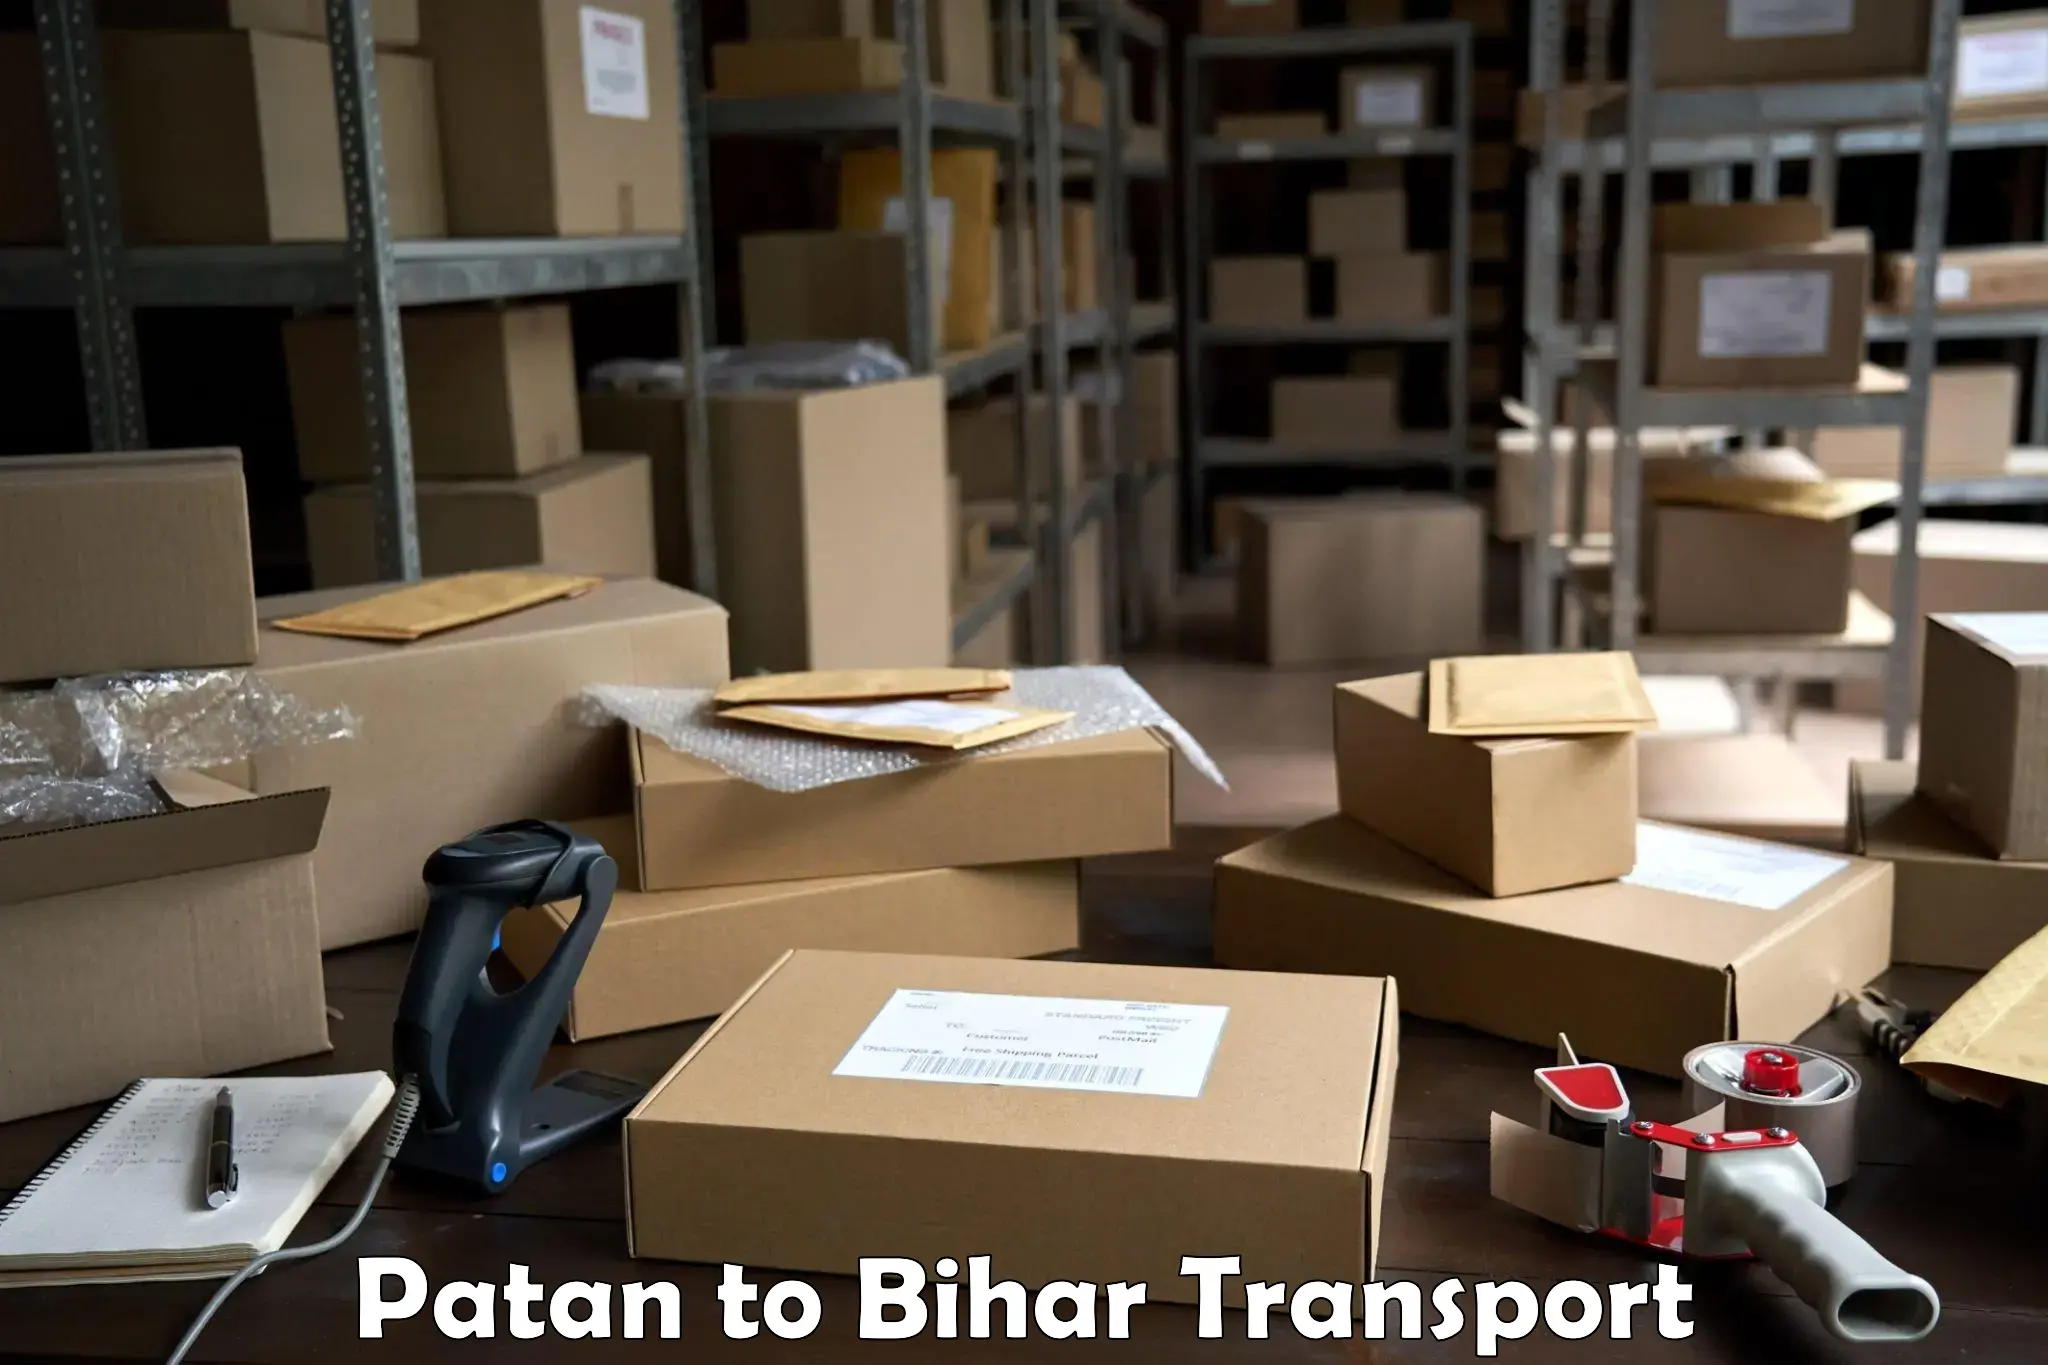 Bike transport service Patan to Bihar